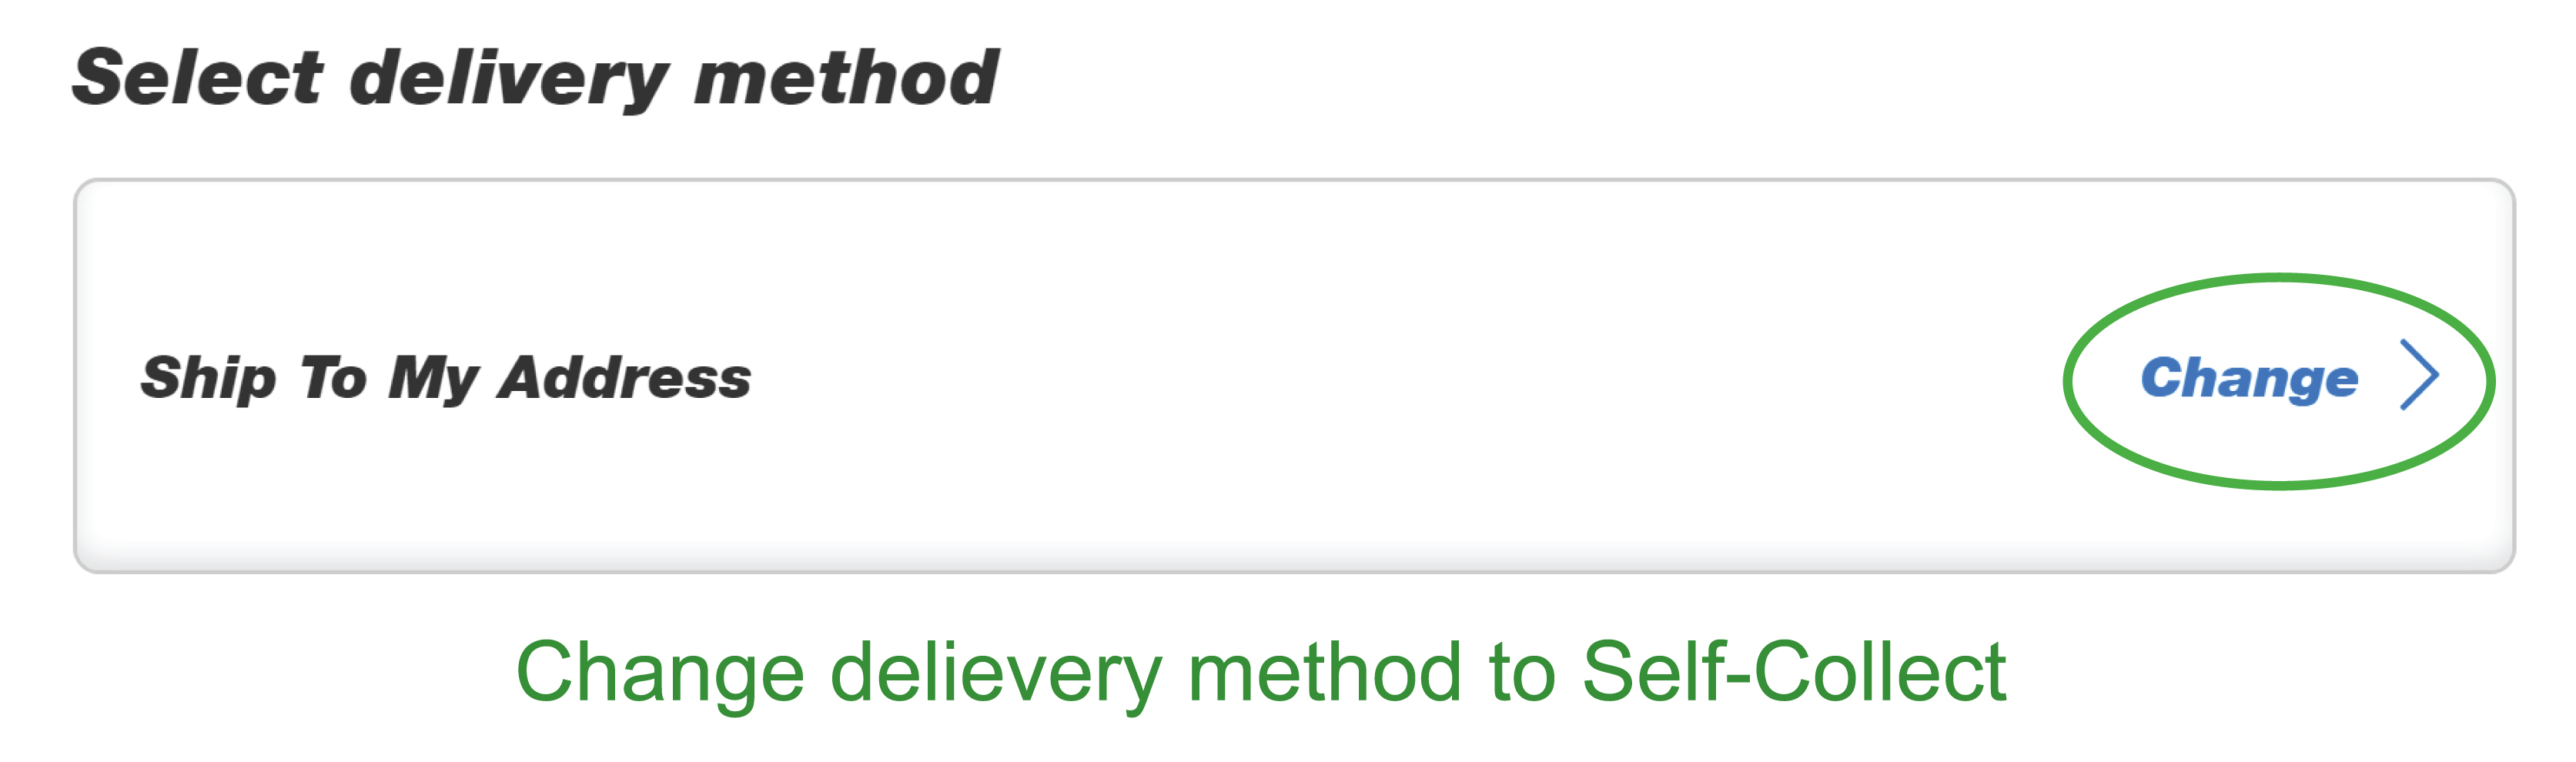 Change delivery method.jpg